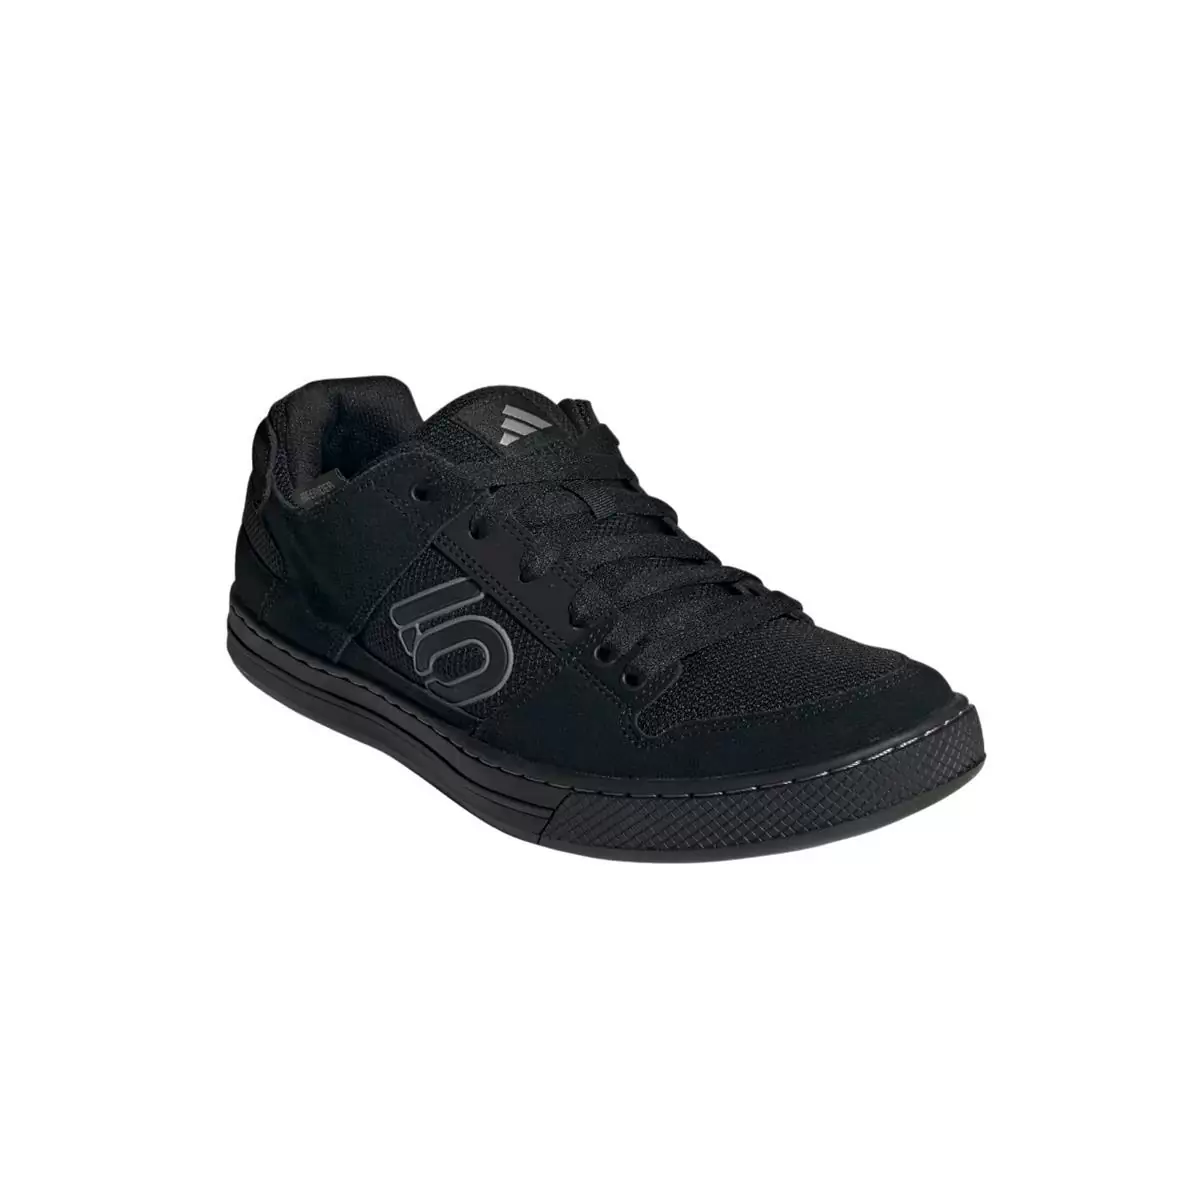 MTB Shoes Flat Freerider Black Size 41 #4